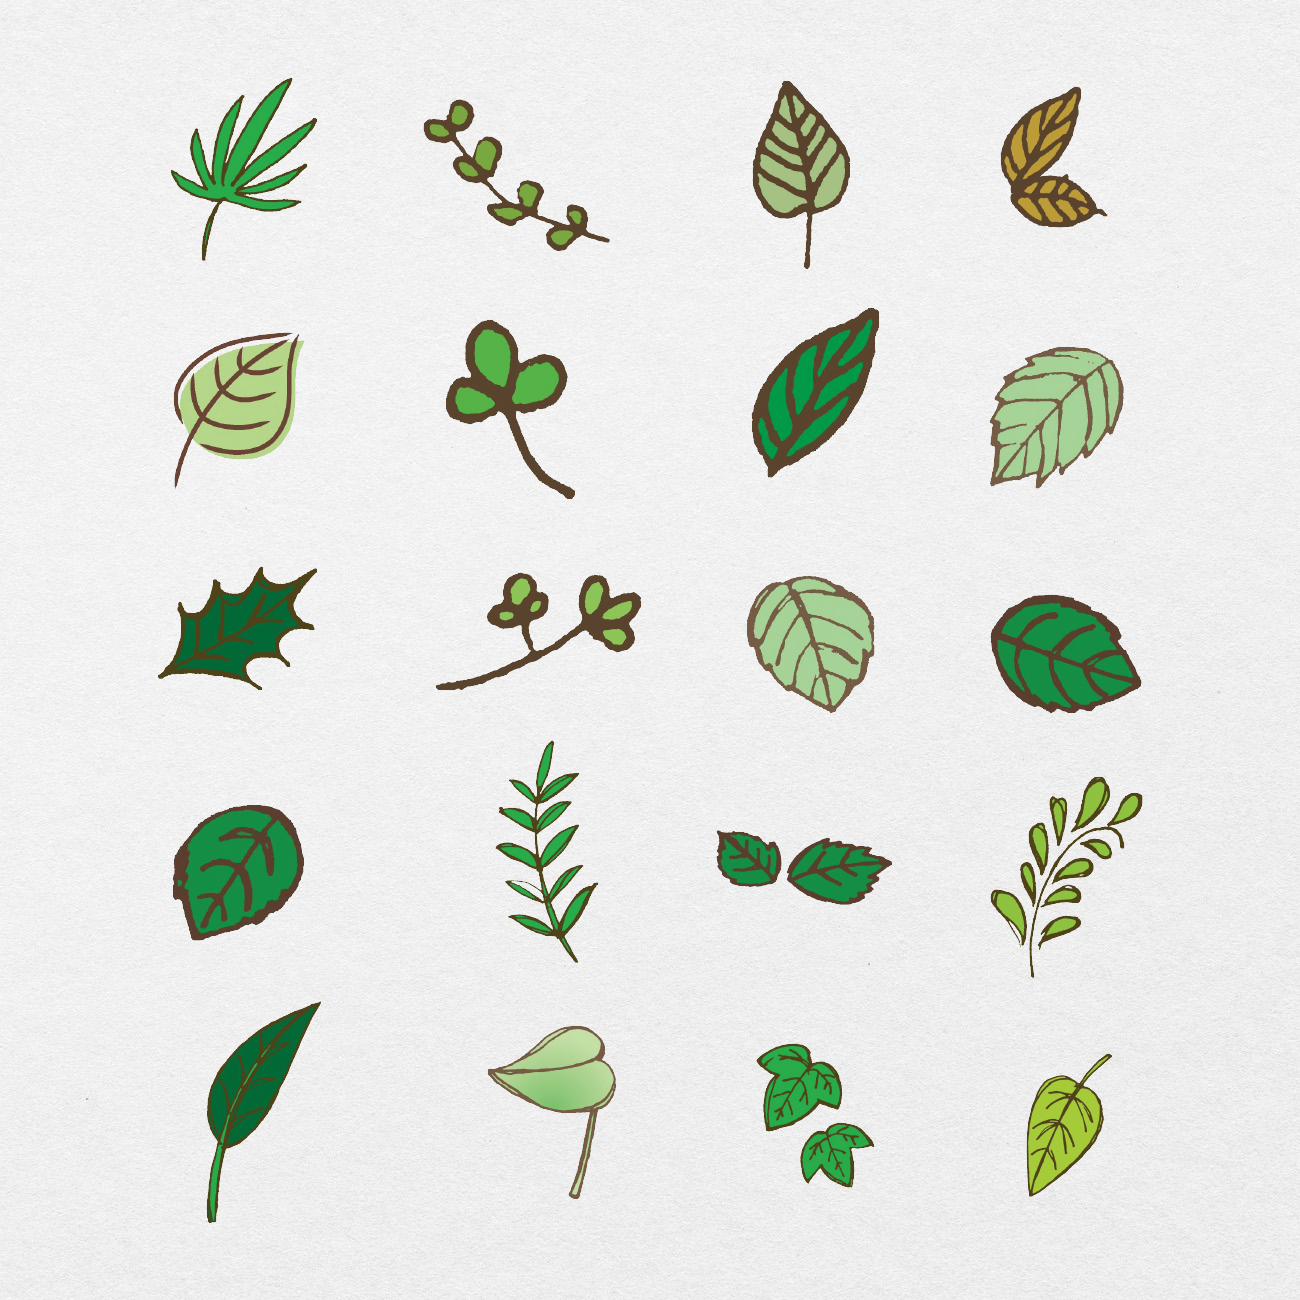 201 Digital Trees and Plants Sticker Bundle - Stationery Pal